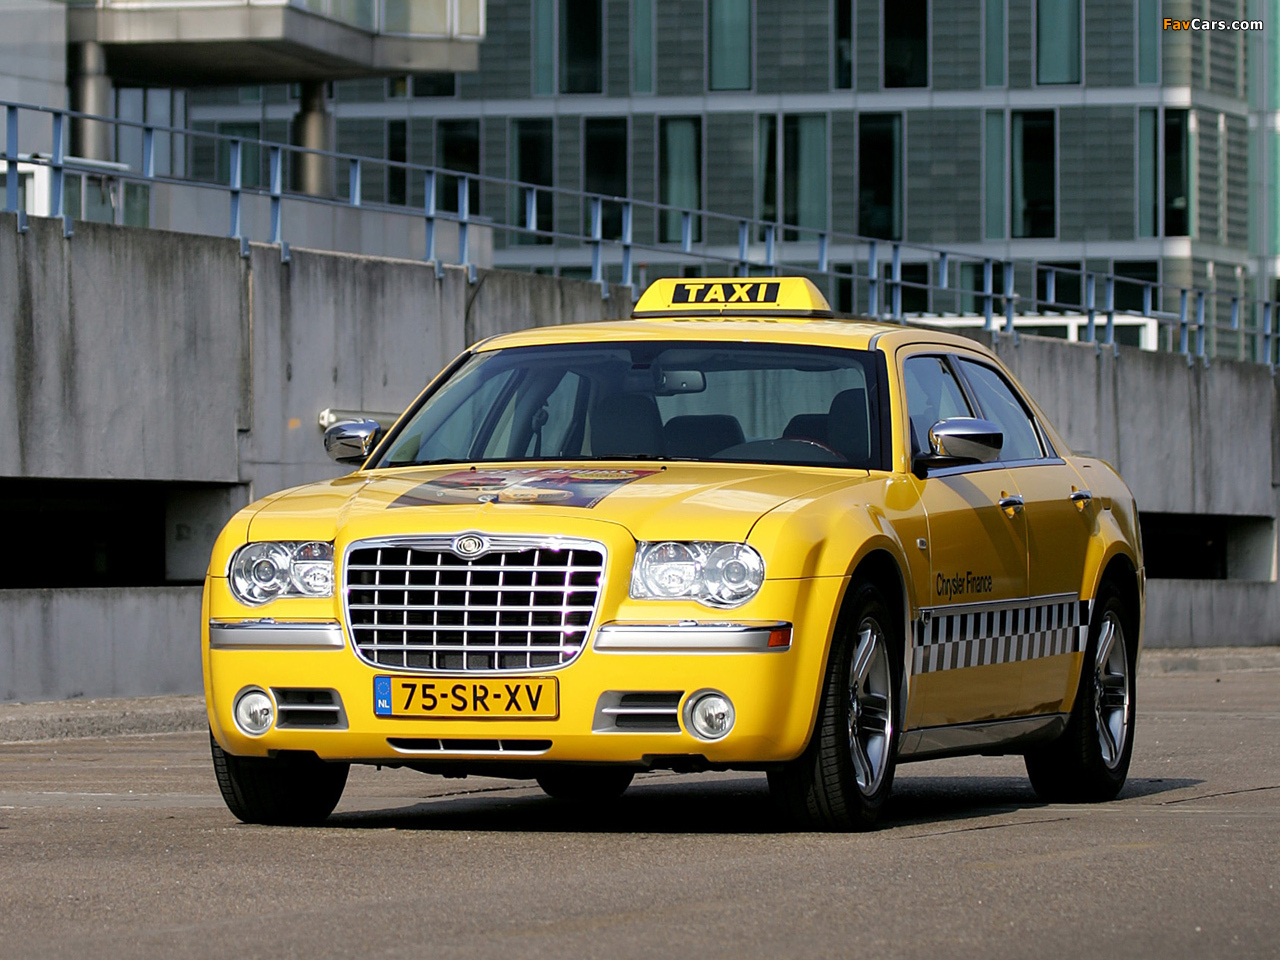 Машины для такси какие года подходят. Chrysler 300c Taxi. Chrysler 300 Taxi. Крайслер 300 с такси. Chrysler 300 NYC Taxi.